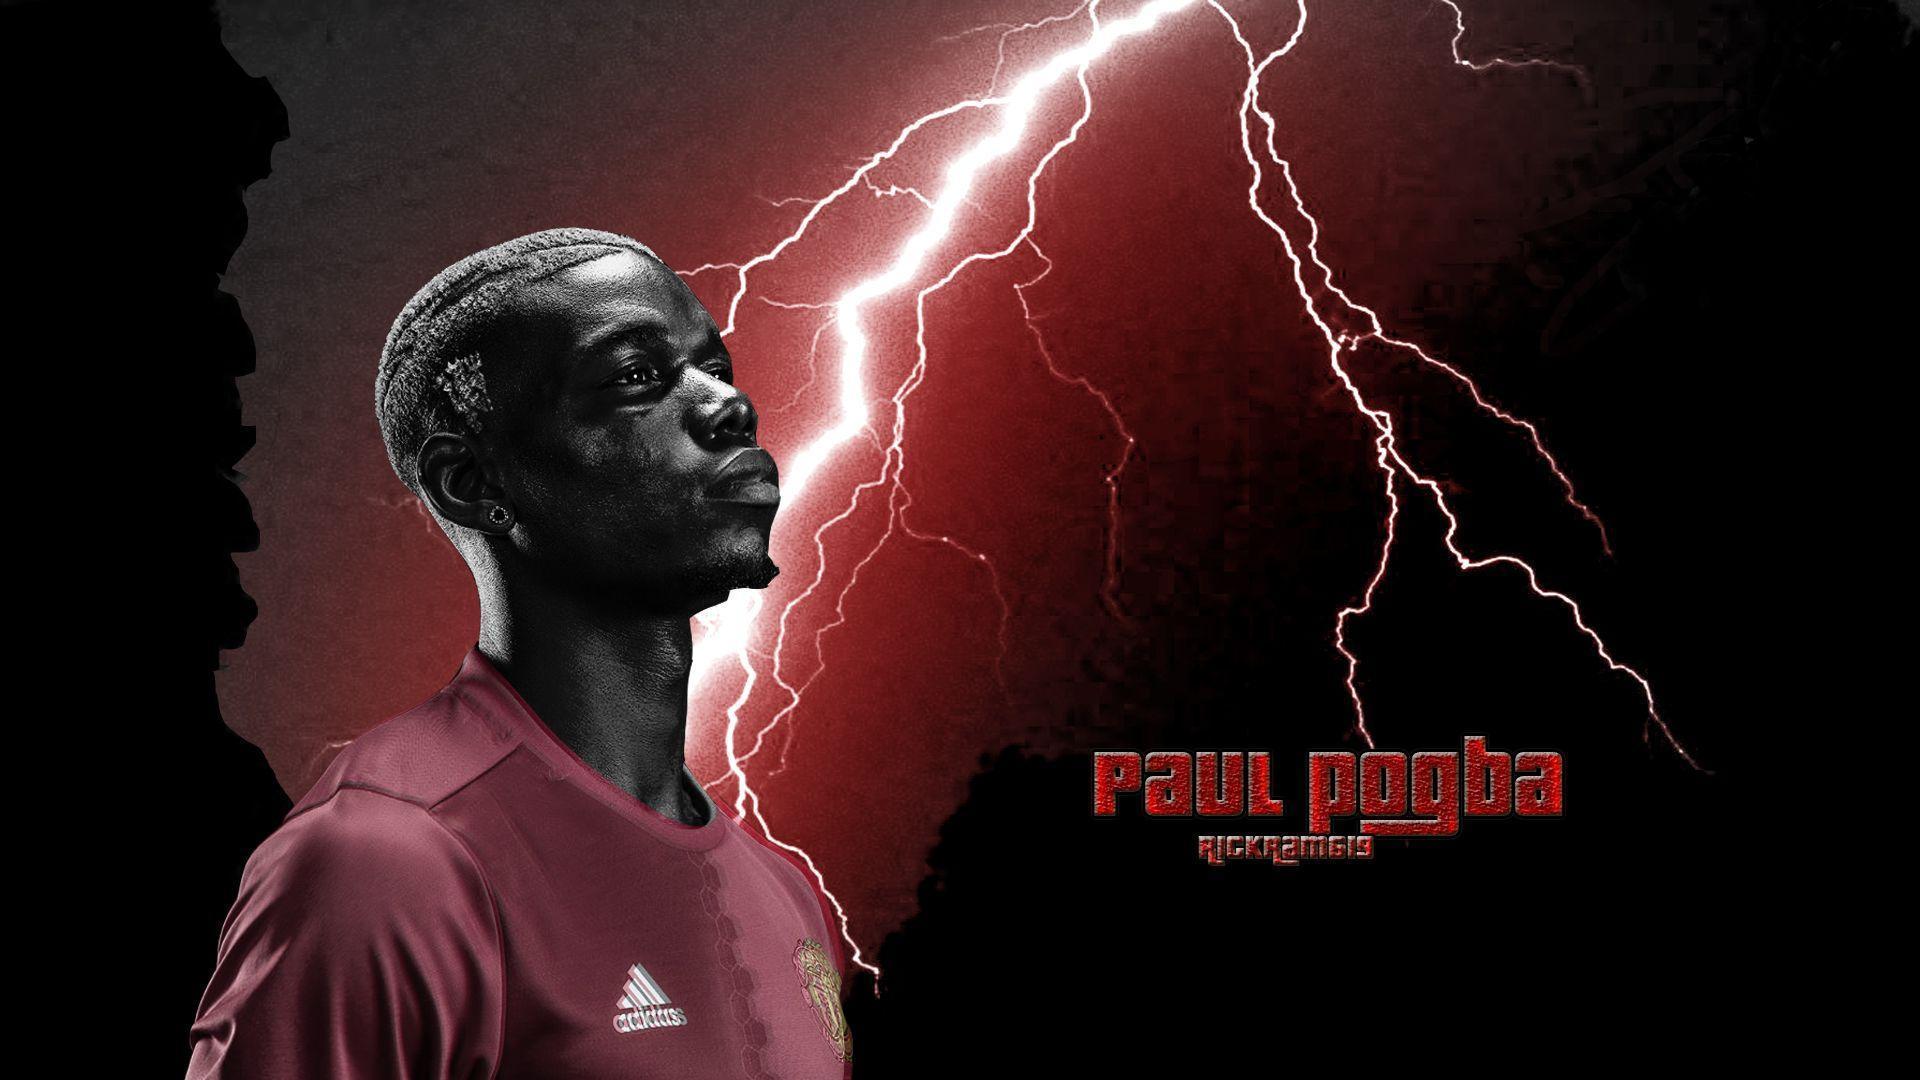 Paul Pogba Manchester United 2017 wallpaper